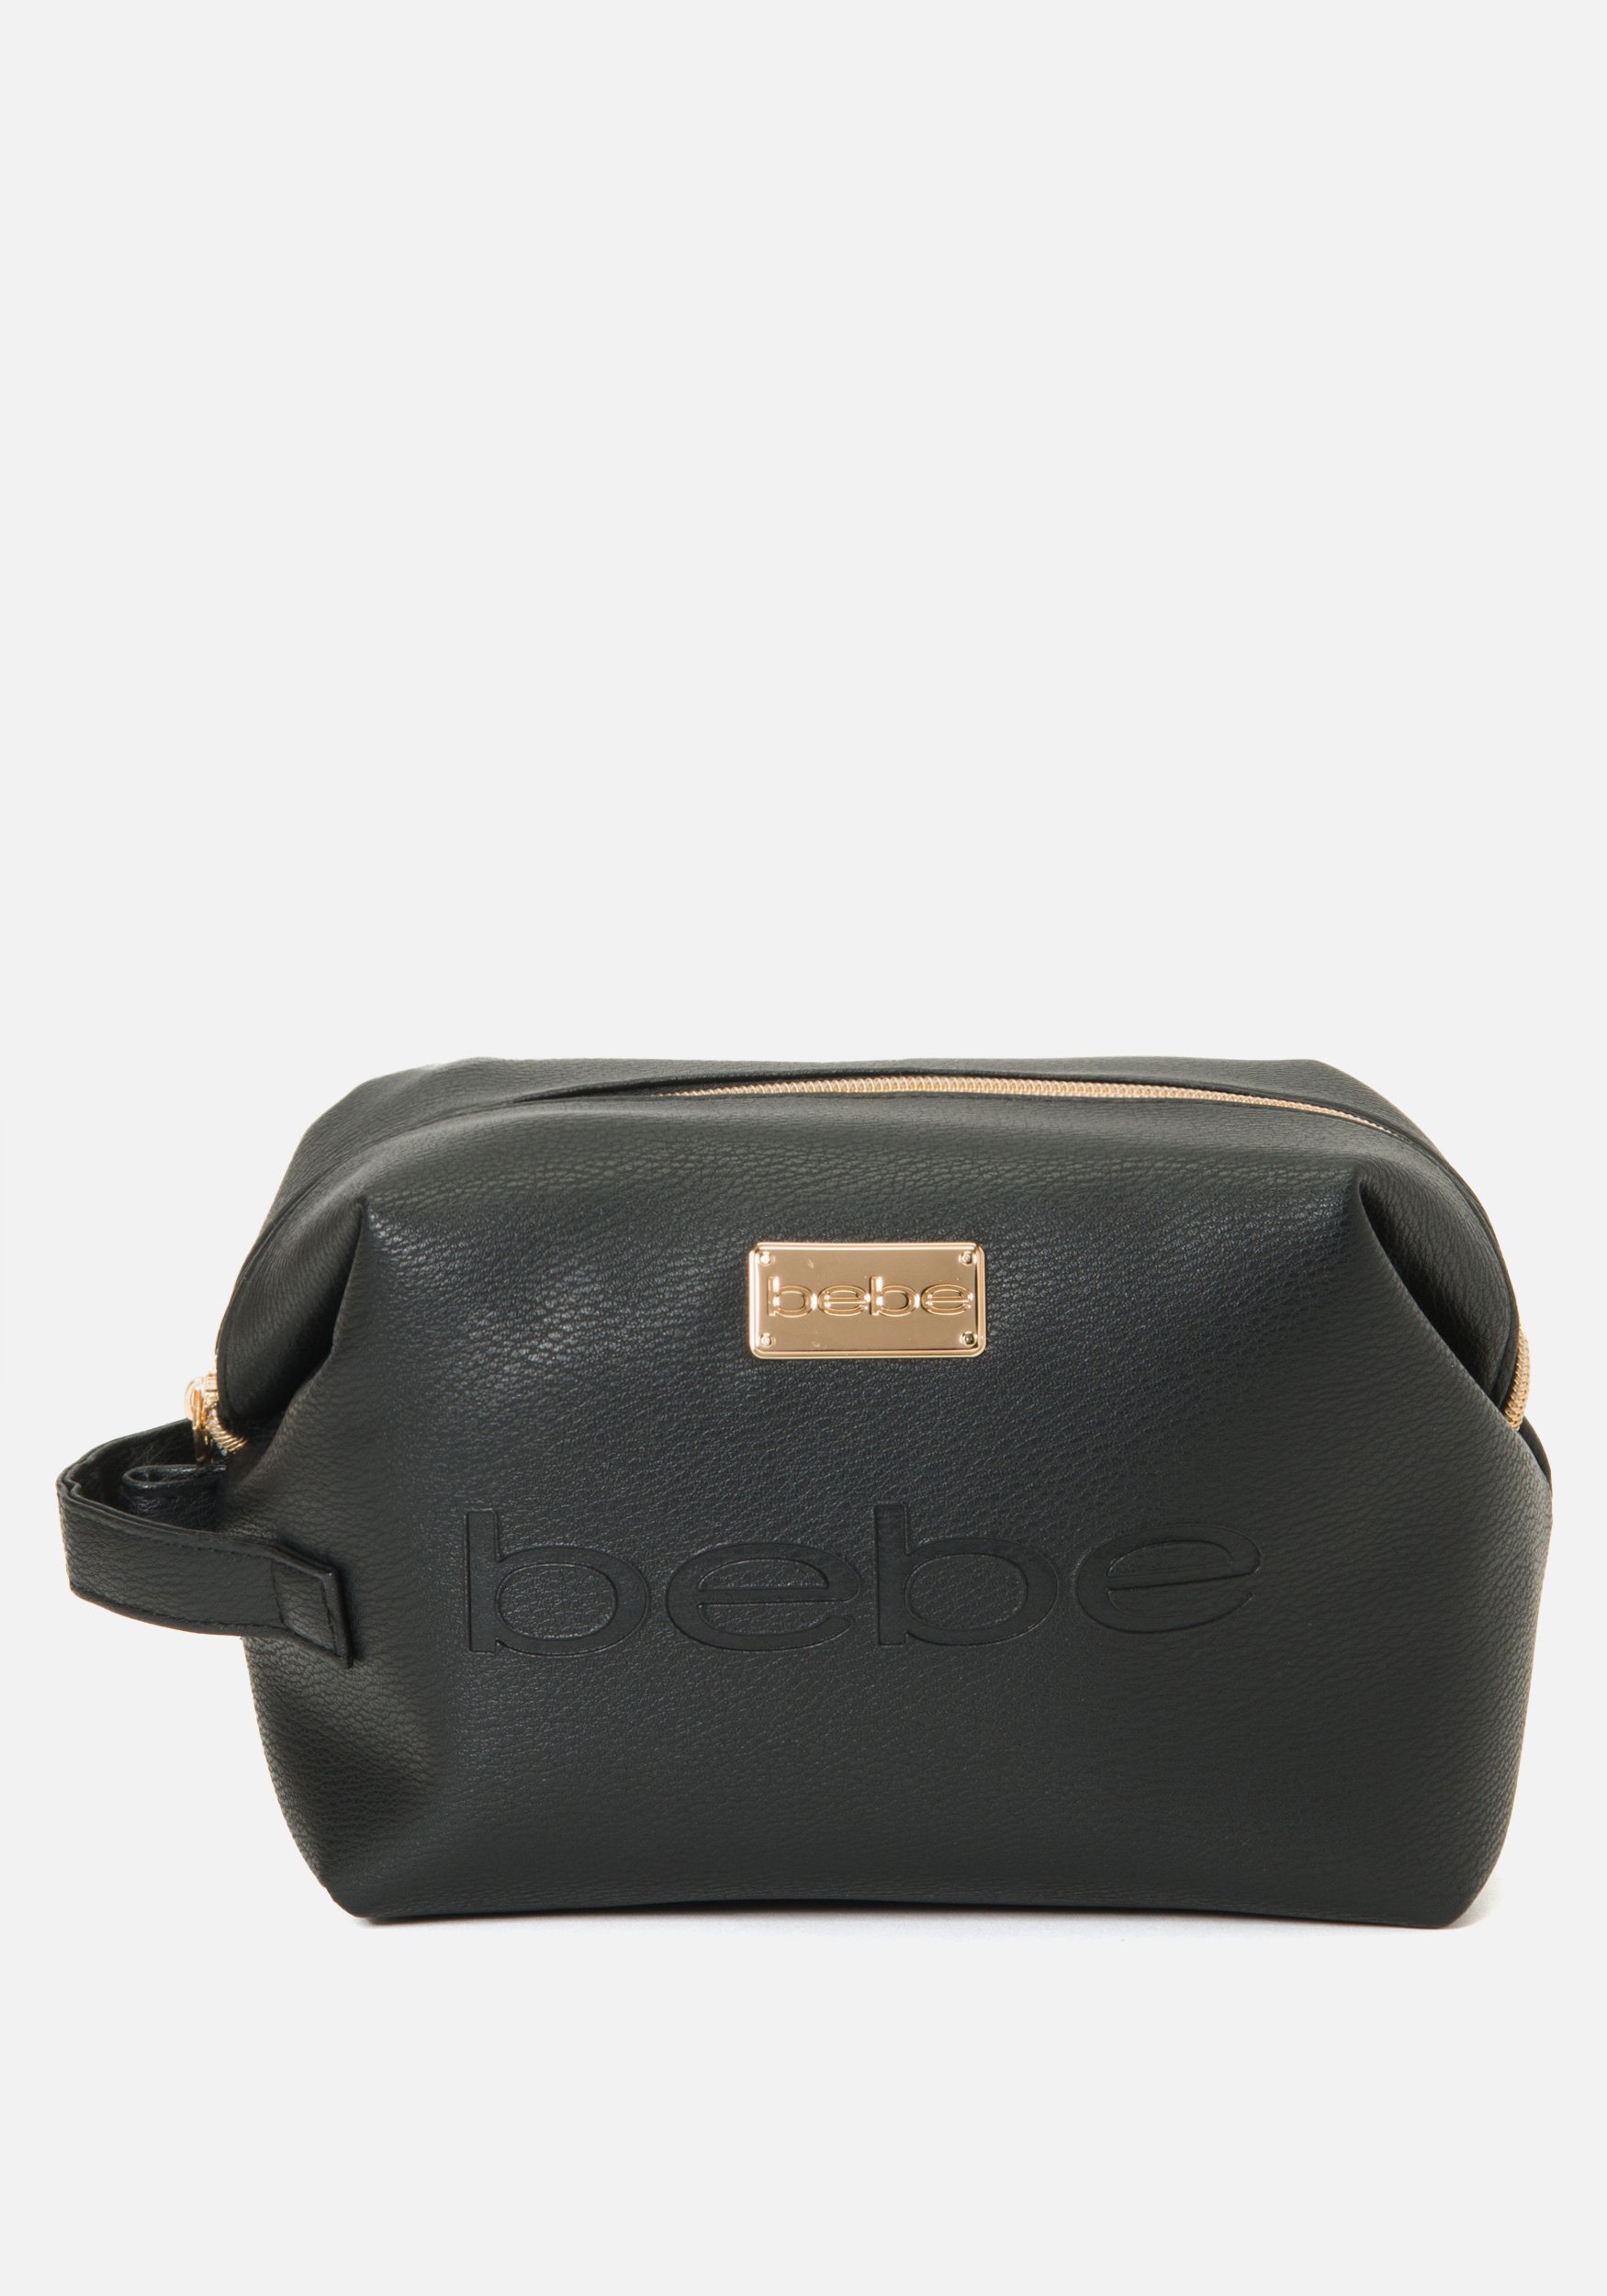 Women's Black Embossed Bebe Logo Cosmetic Bag, Size Standard Synthetic